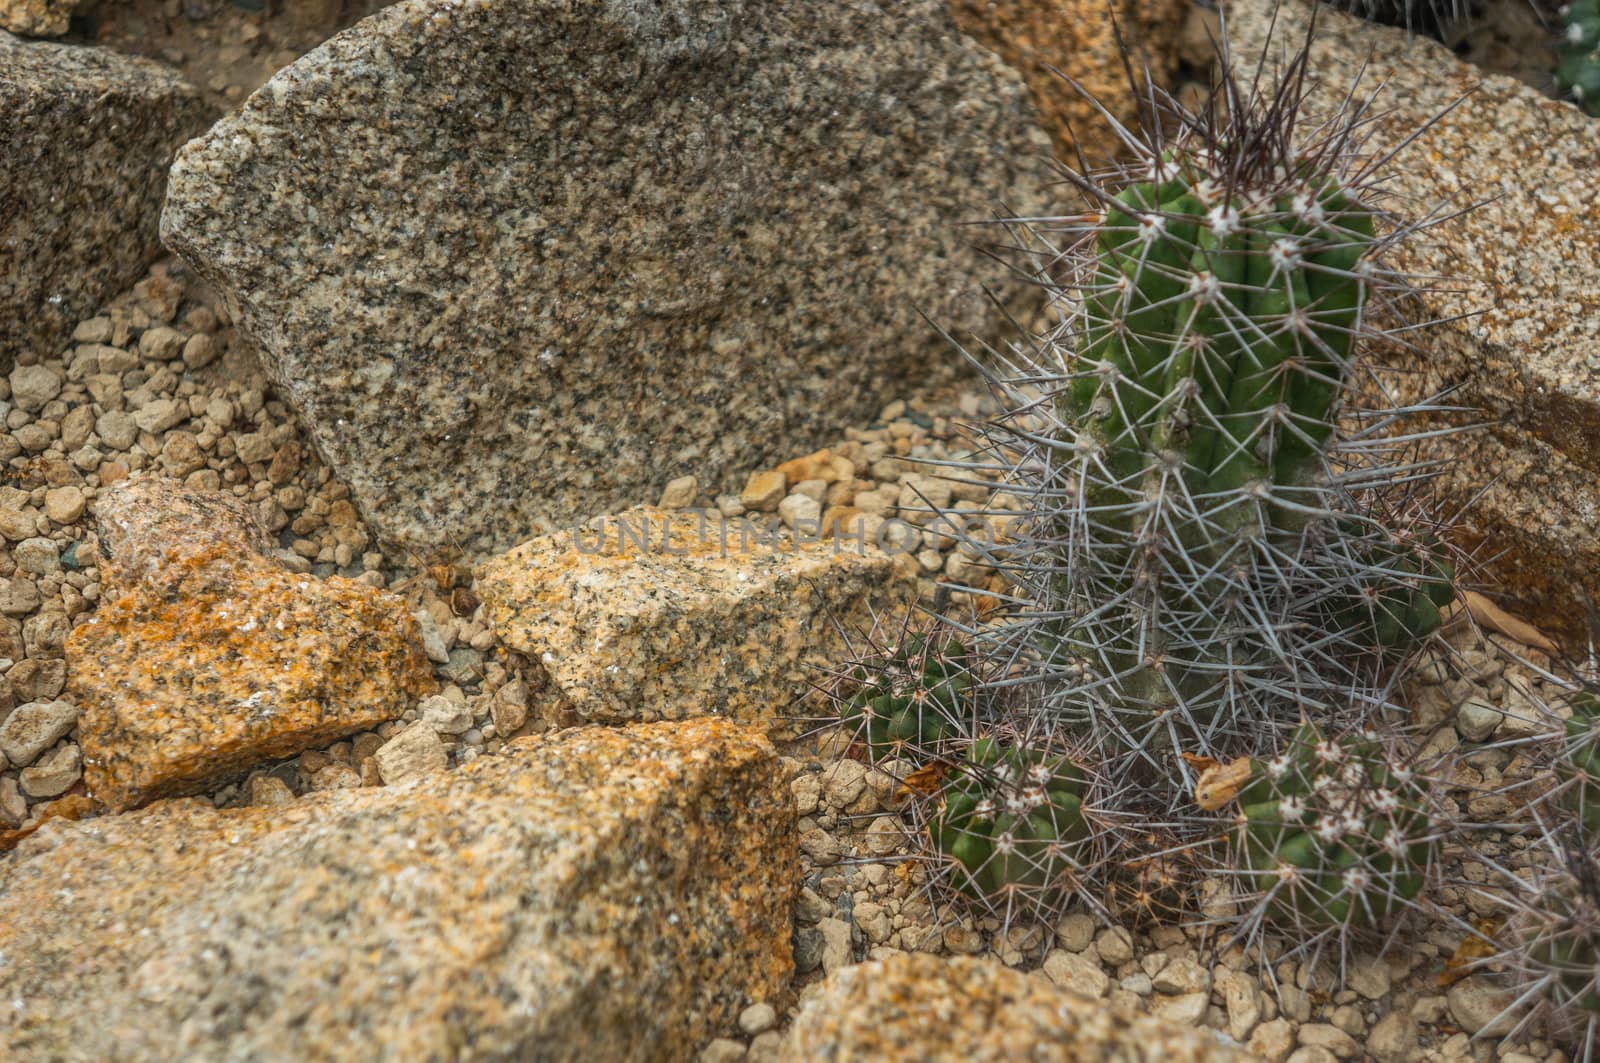 Small group of green "copiapoa echinata" cactus plants by sara_lissaker